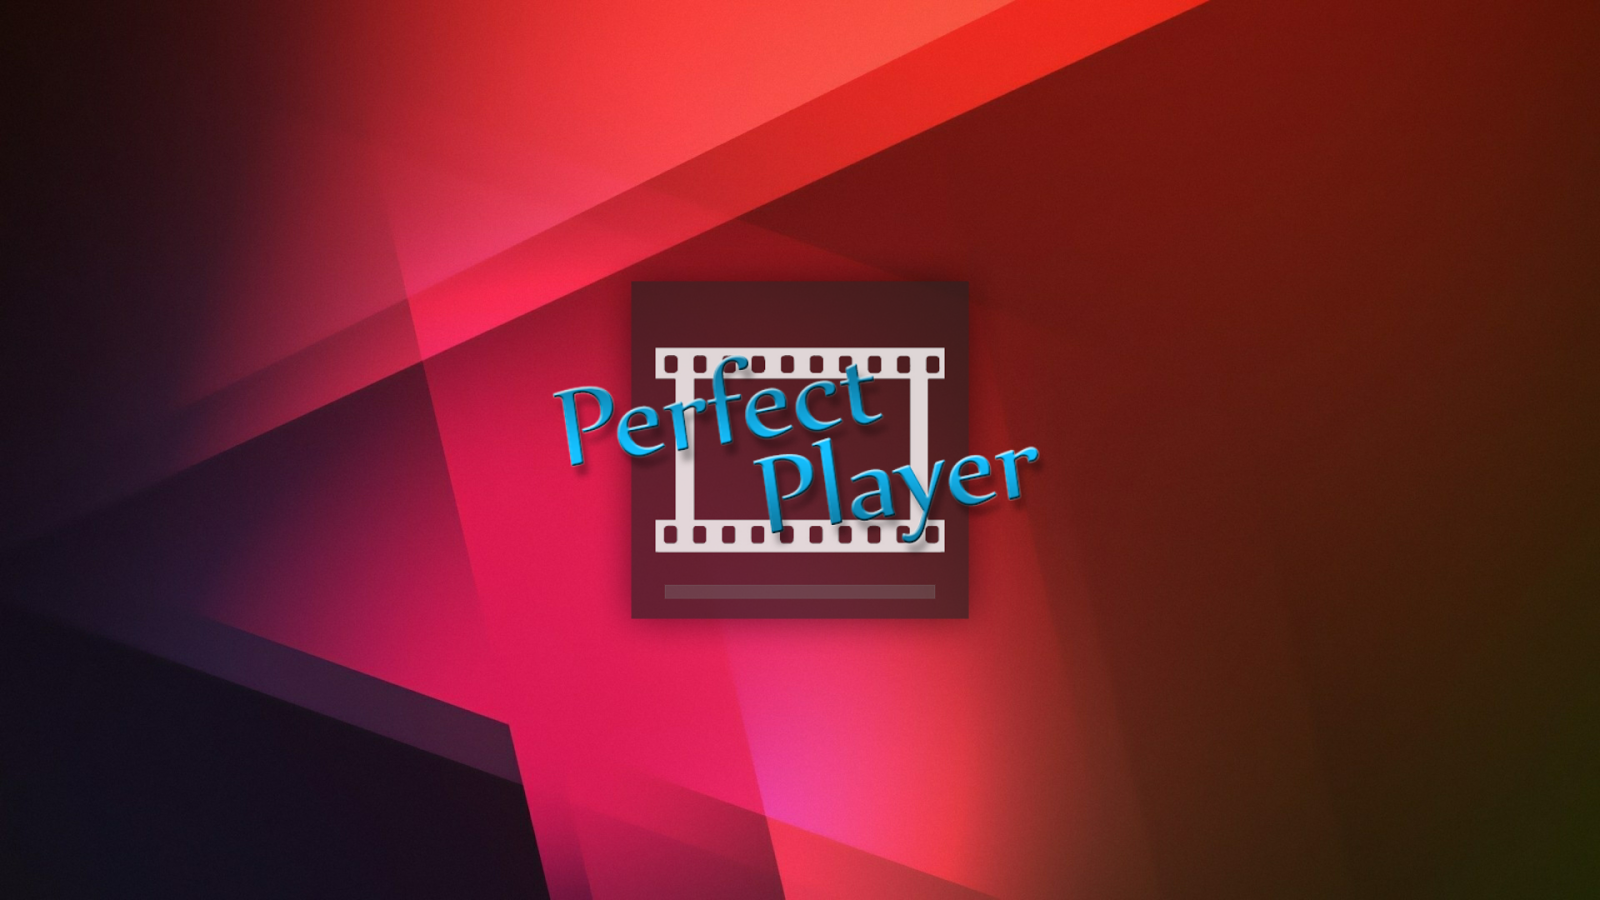 Скачать Perfect Player 1.4.5.1 для Android - 1600 x 900 png 1246kB